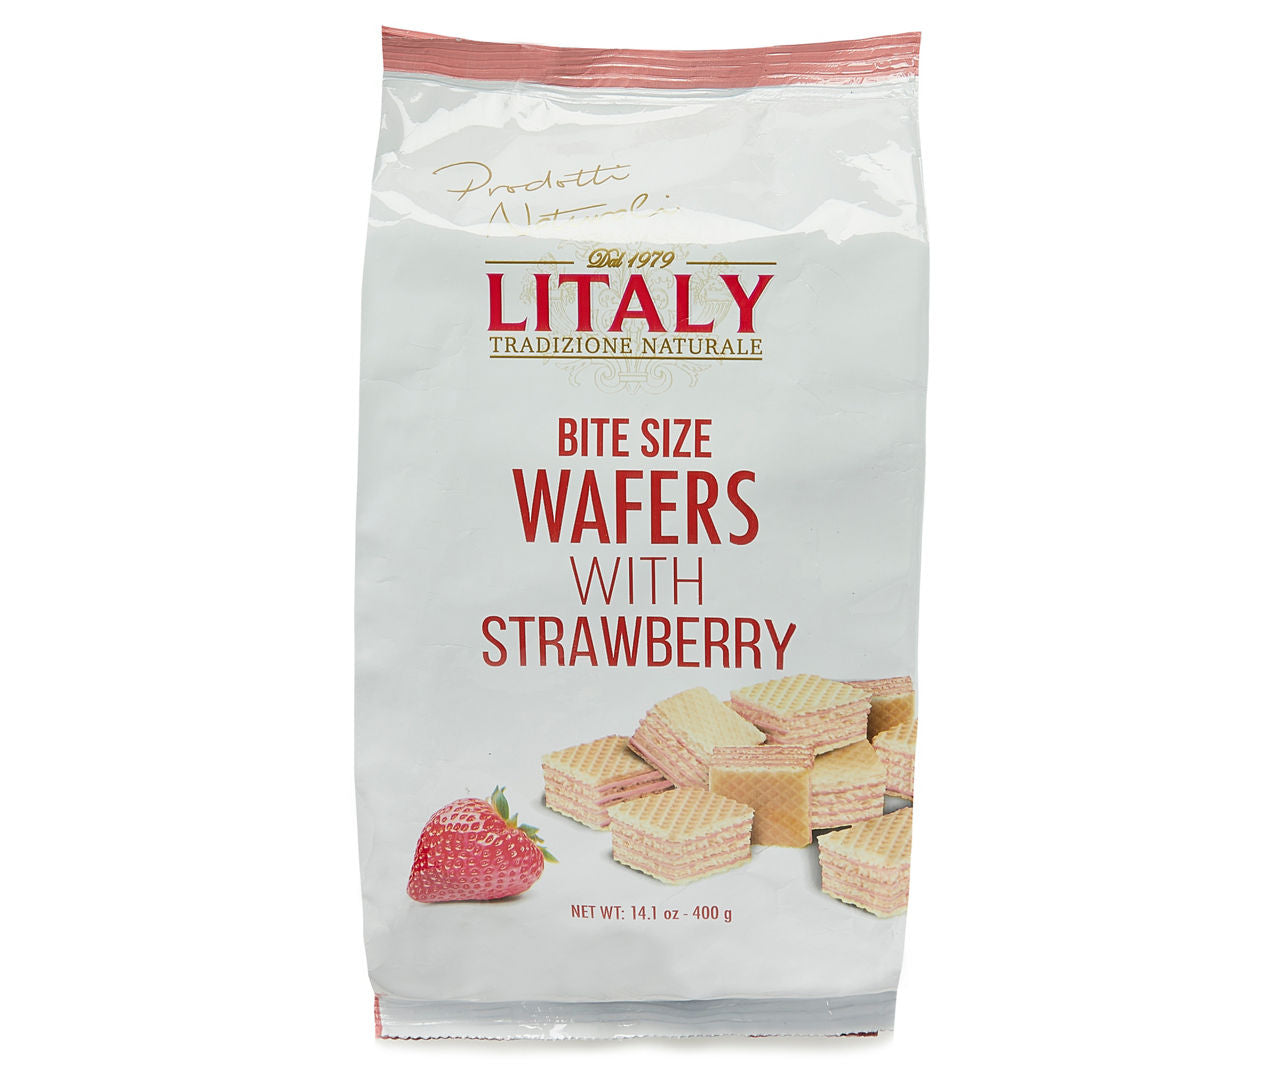 Litaly Bite Size Wafers with Strawberry 14.1 oz